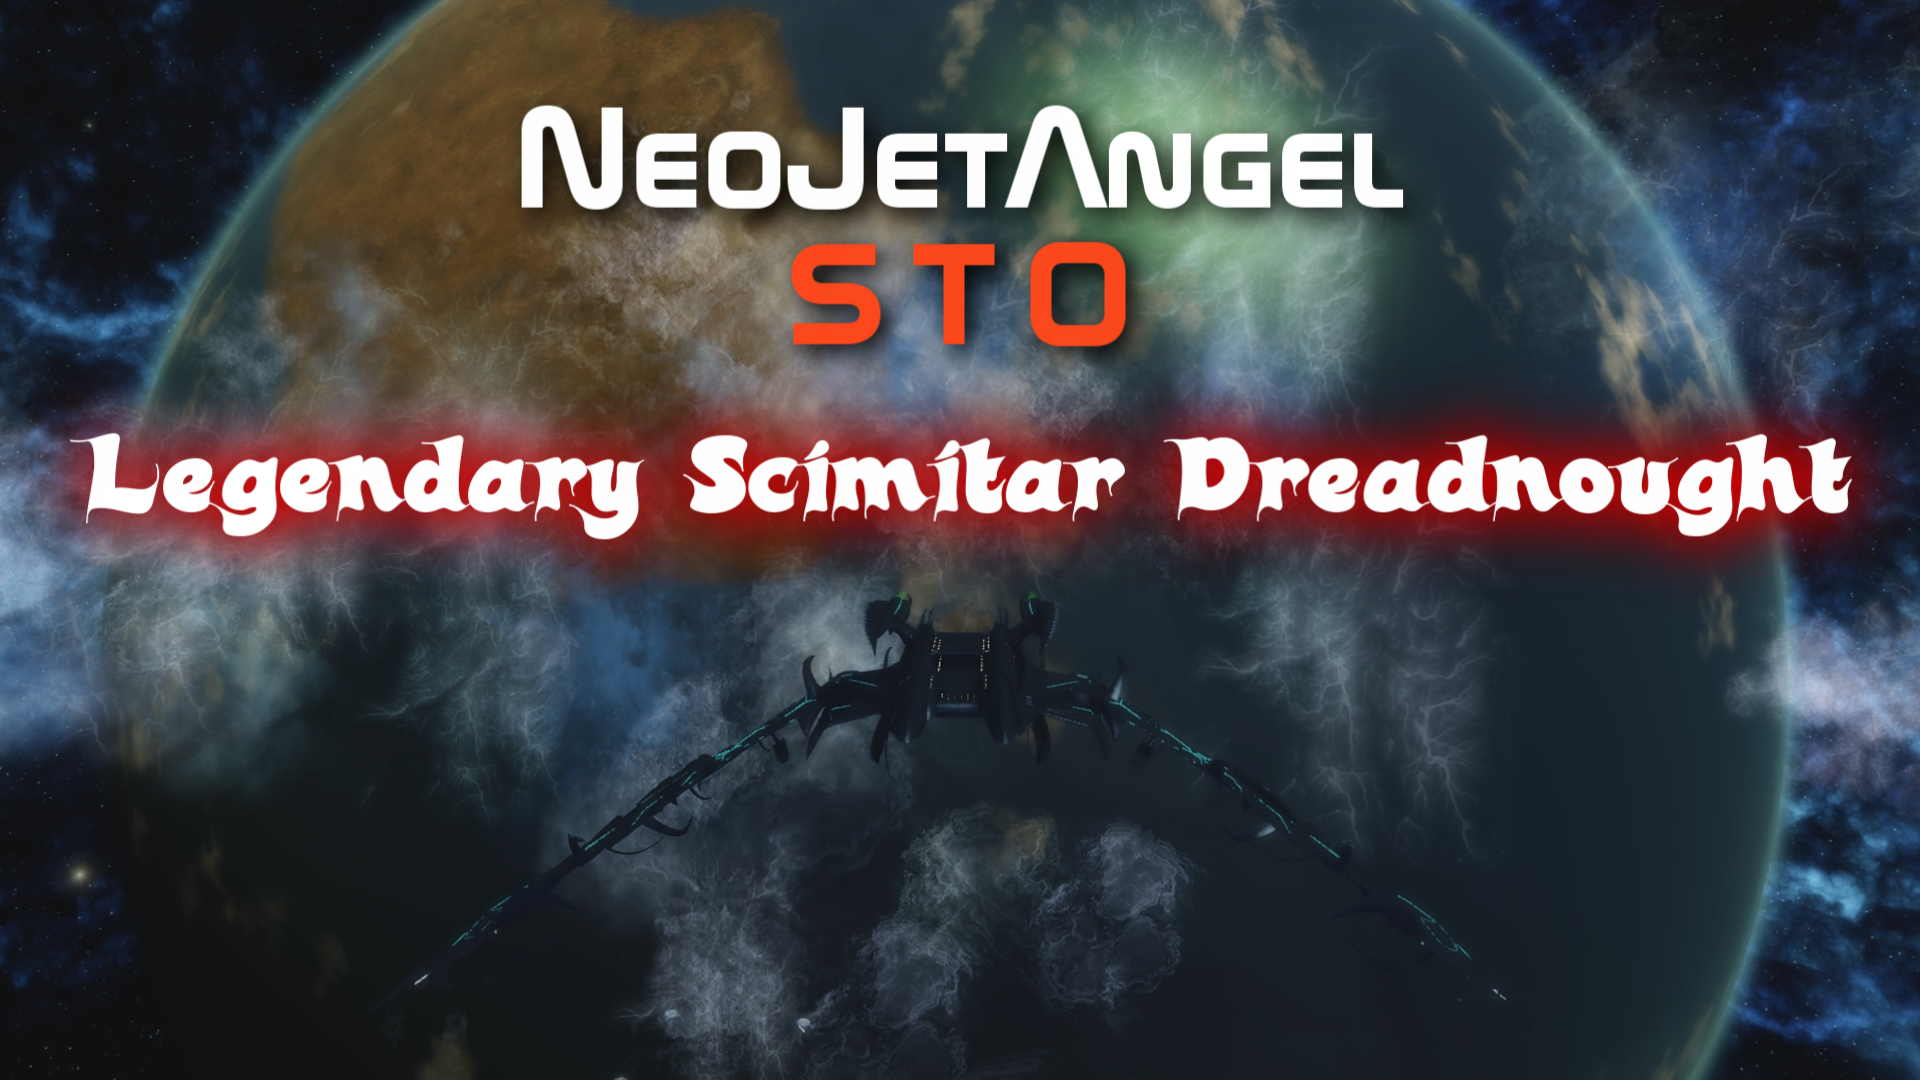 NeoJetAngel STO - Legendary Scimitar Intel Dreadnought Warbird - Solo Elite Build Primer